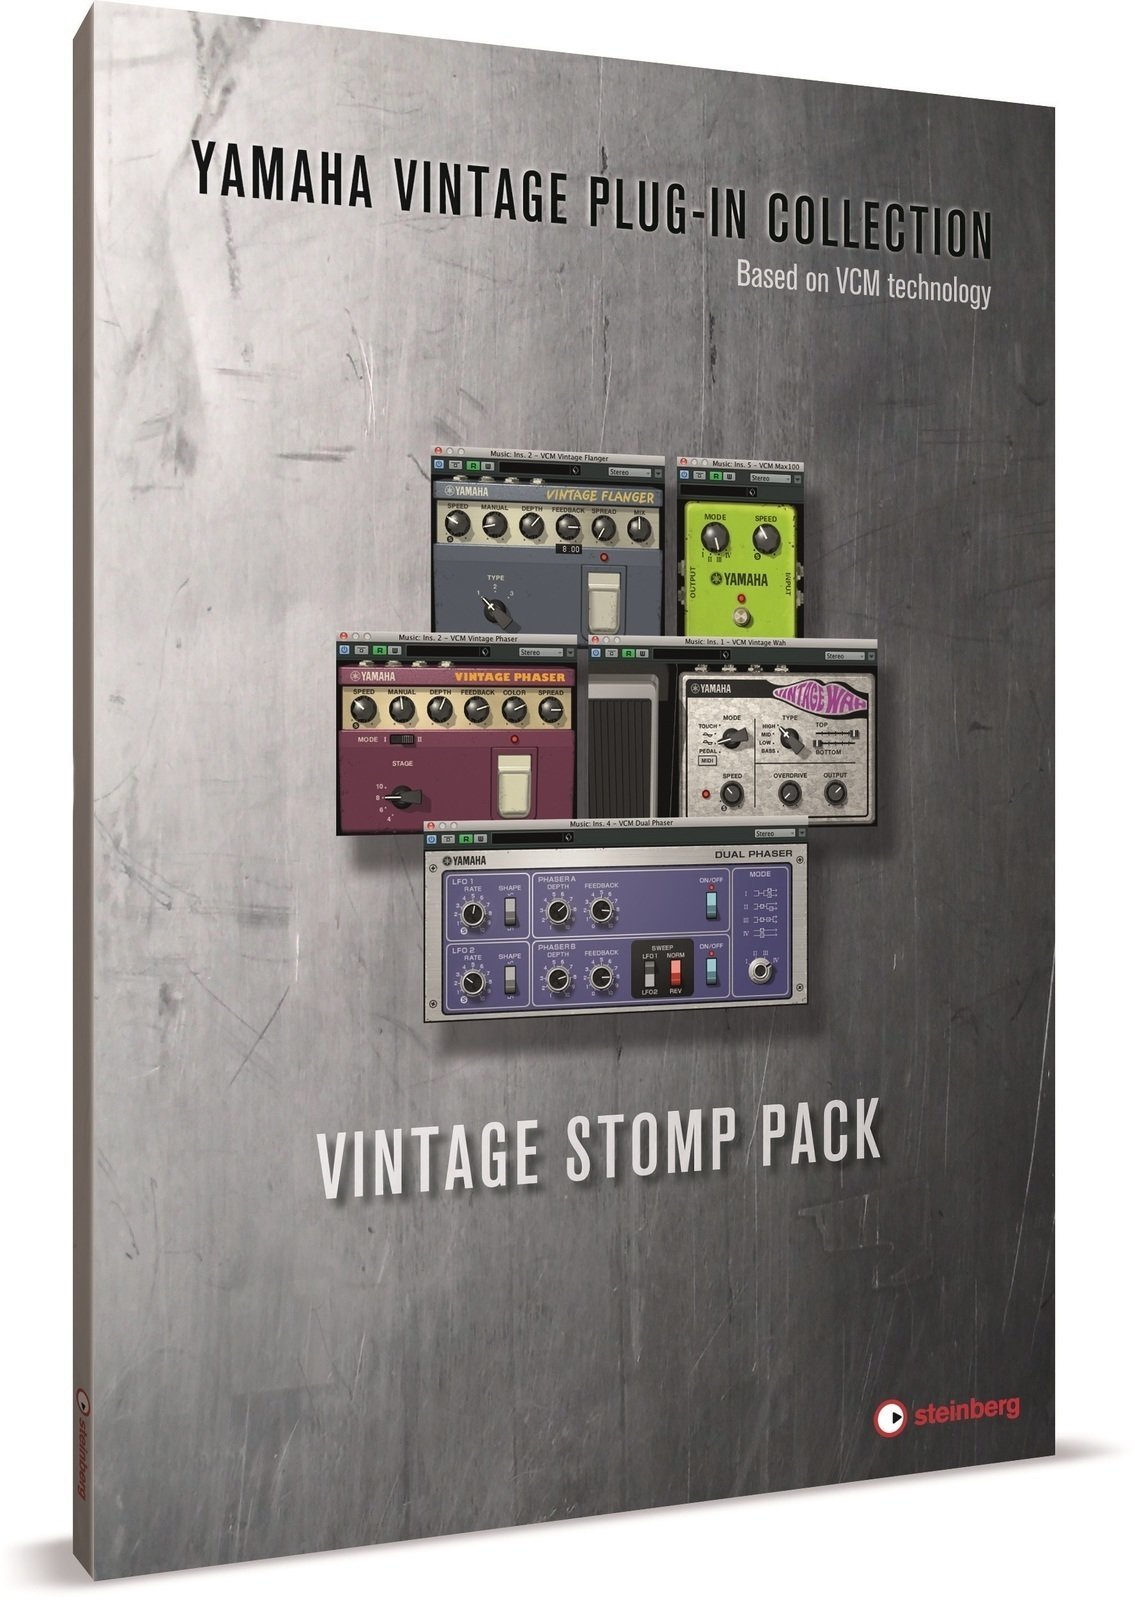 Studijski software VST glasbilo Steinberg Vintage Stomp Pack